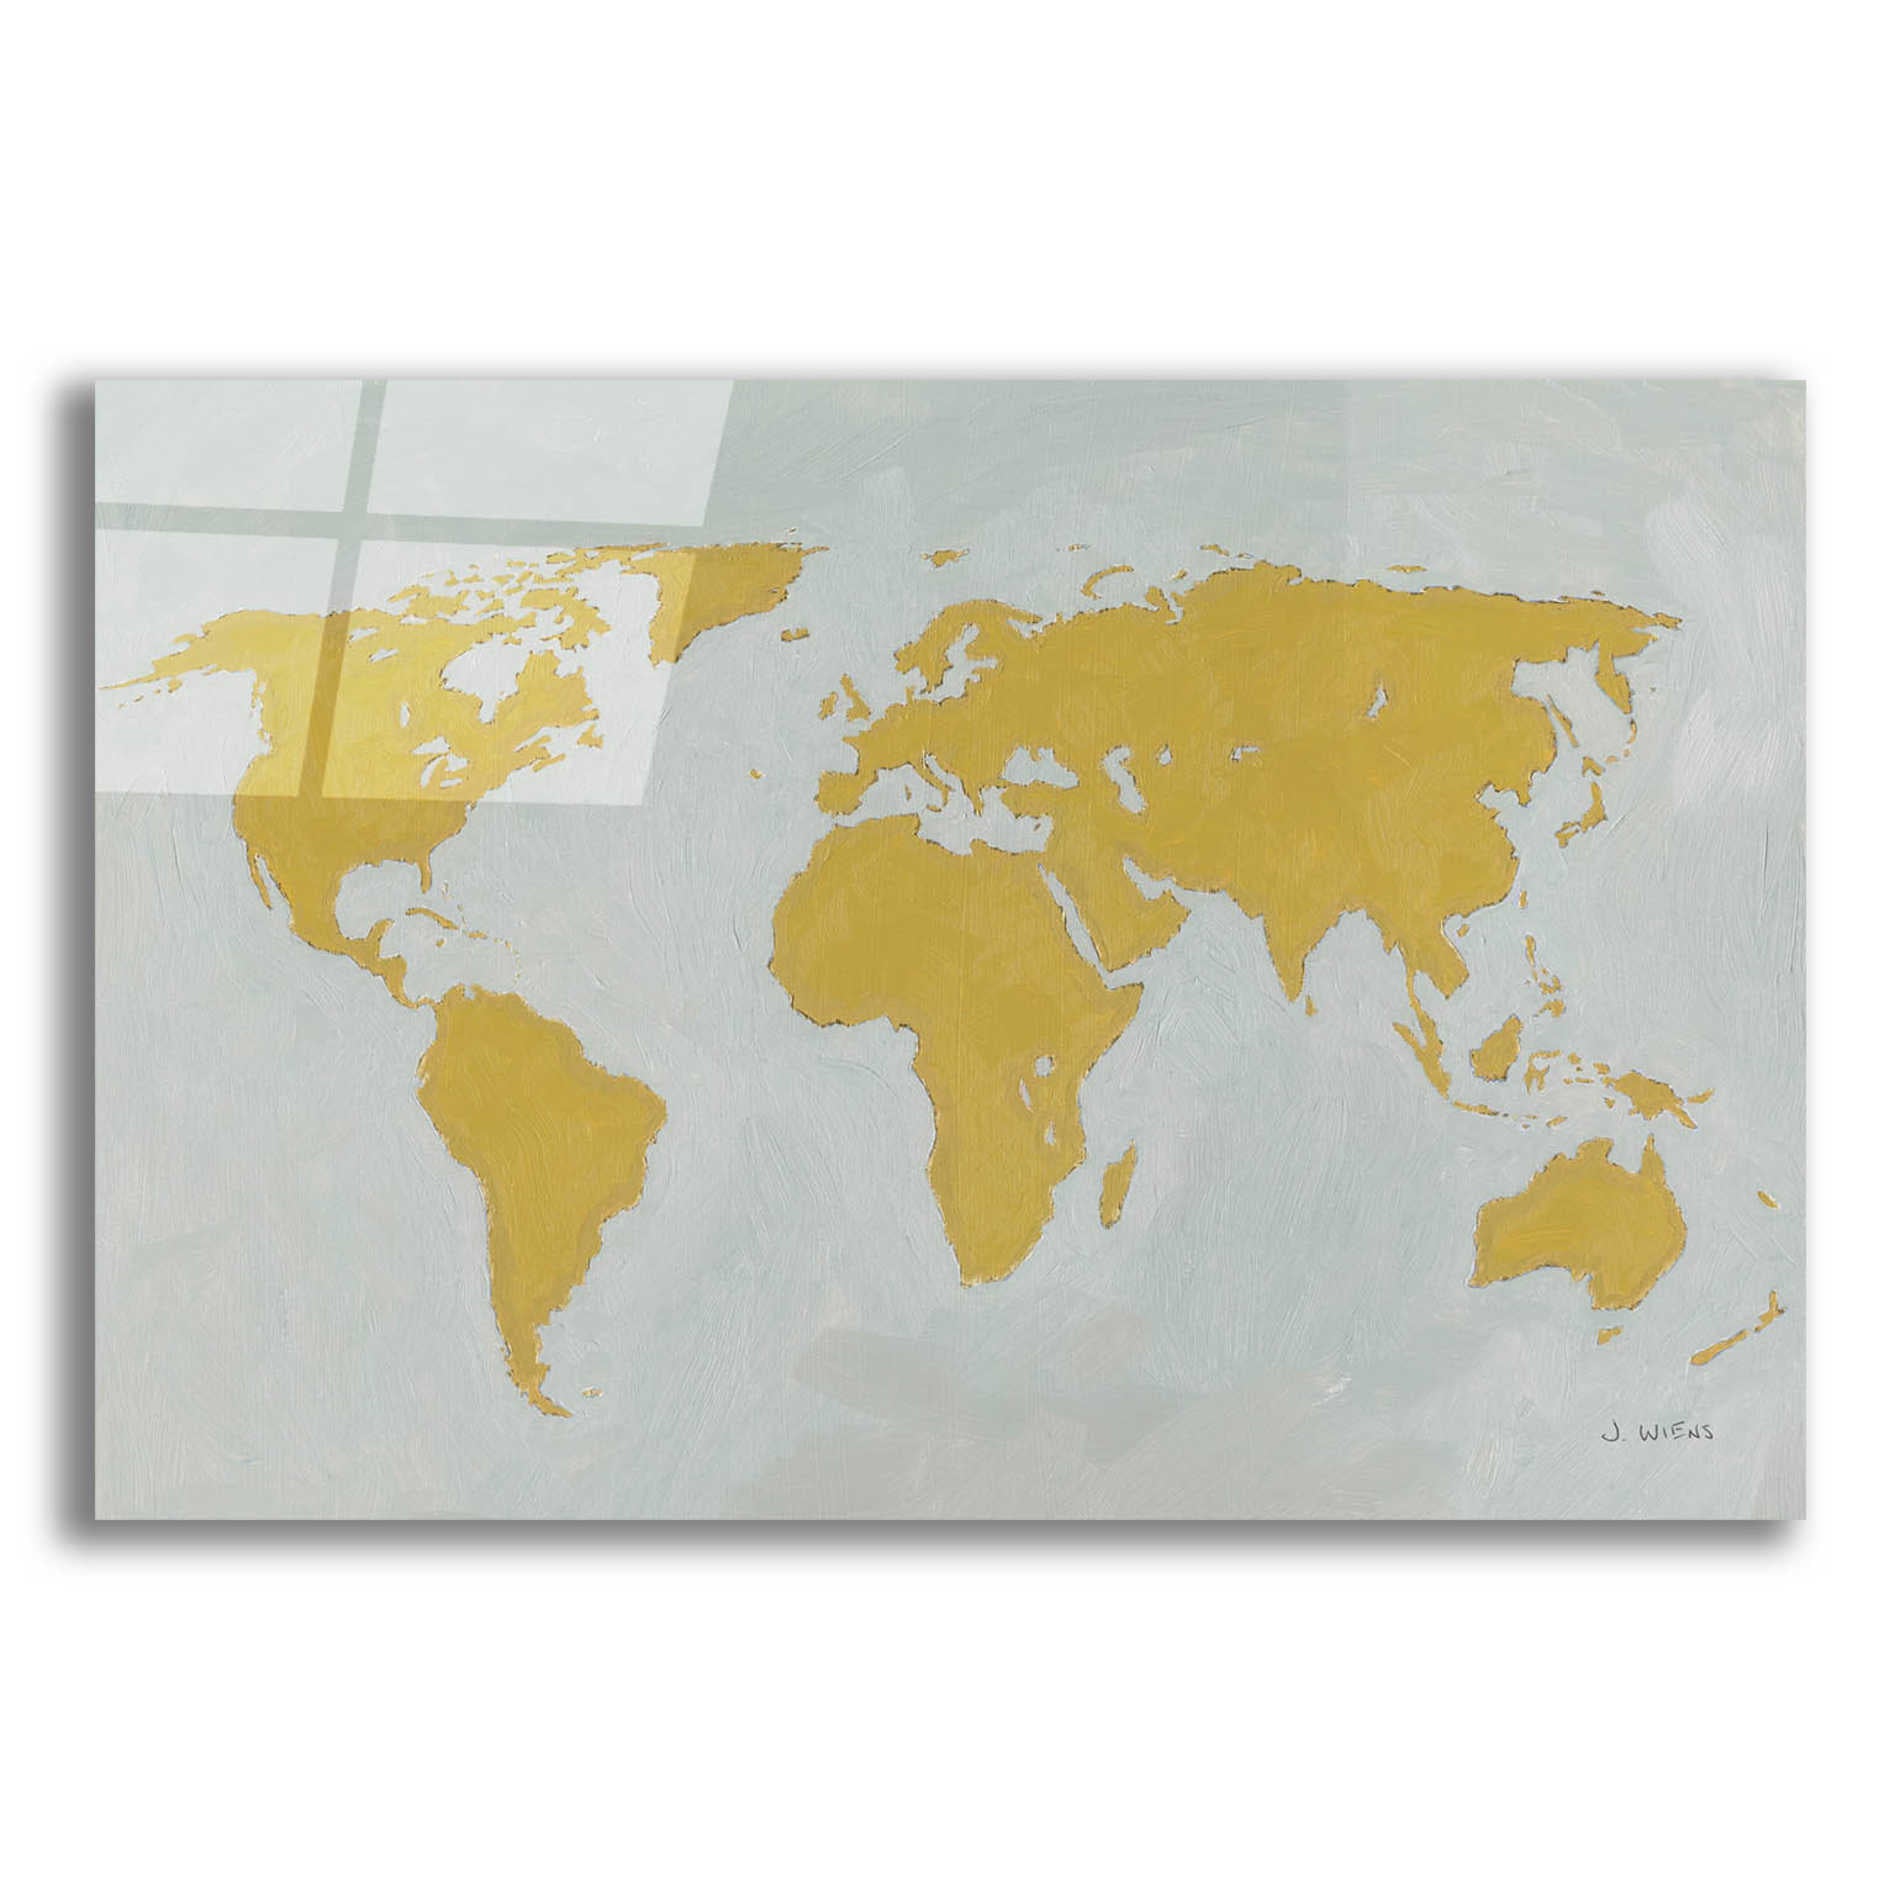 Epic Art 'Golden World' by James Wiens, Acrylic Glass Wall Art,18x12x1.1x0,26x18x1.1x0,40x26x1.74x0,60x40x1.74x0